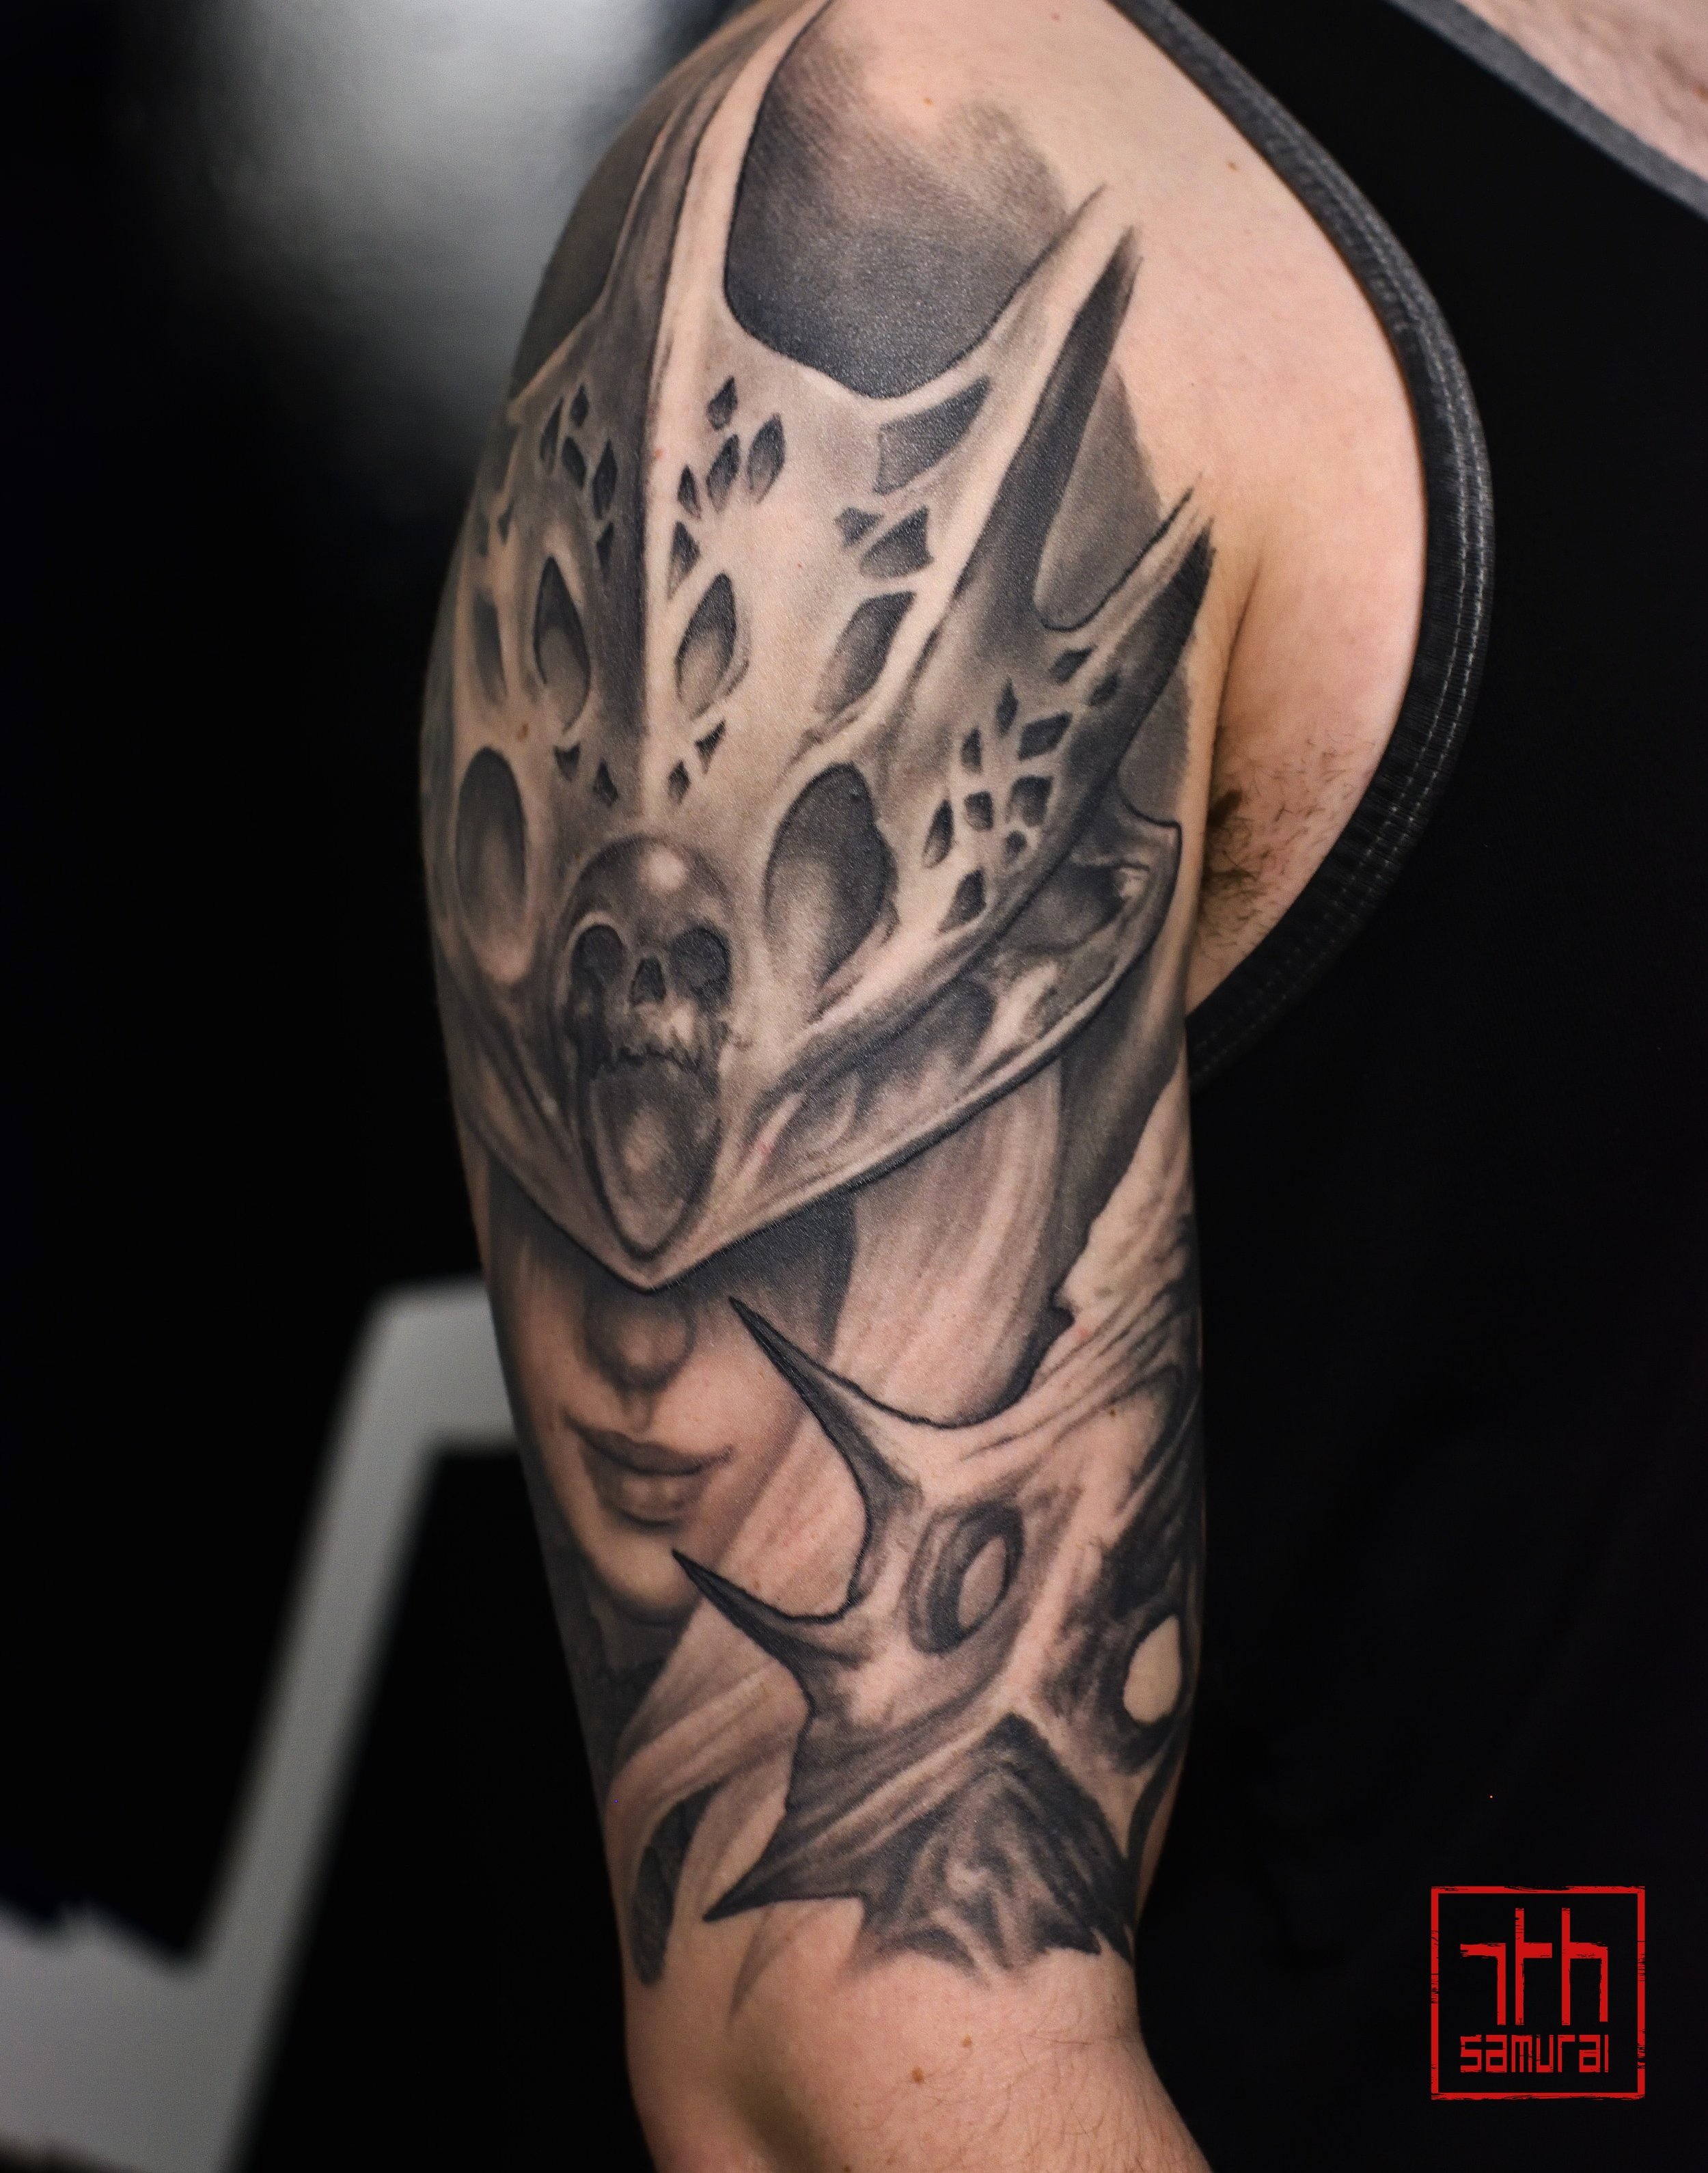 aldrich from dark souls 3  men's video game gamer upper arm tattoo  asian Tattoo artist: Kai at 7th Samurai. YEG Edmonton, Alberta, Canada best 2023